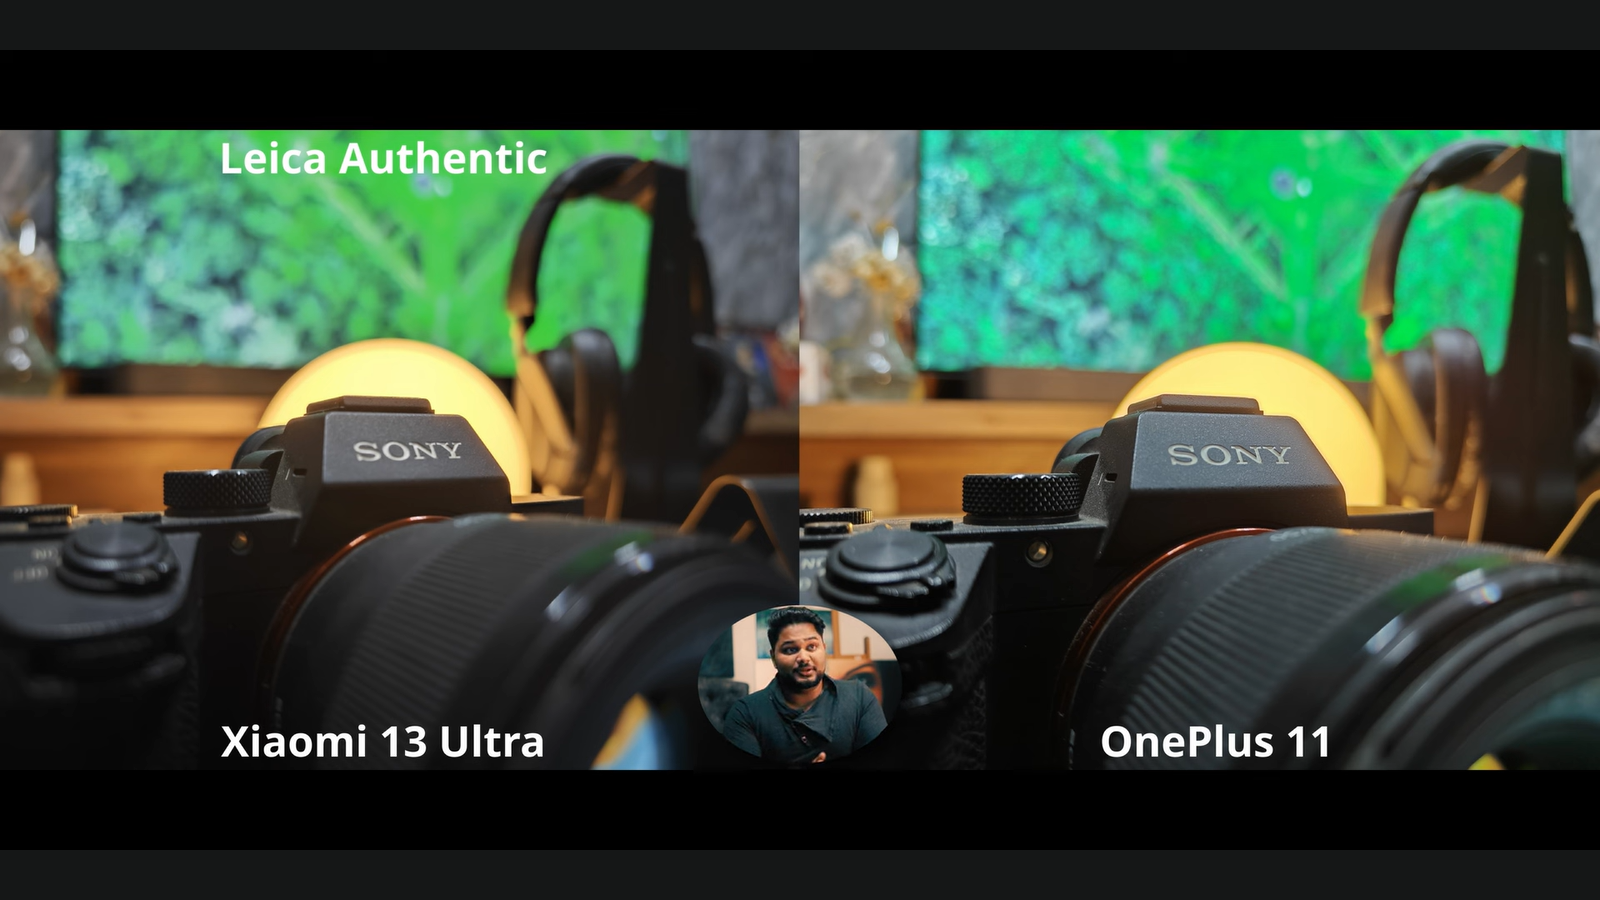 OnePlus 11 сравнили с Xiaomi 13 Ultra по качеству камер